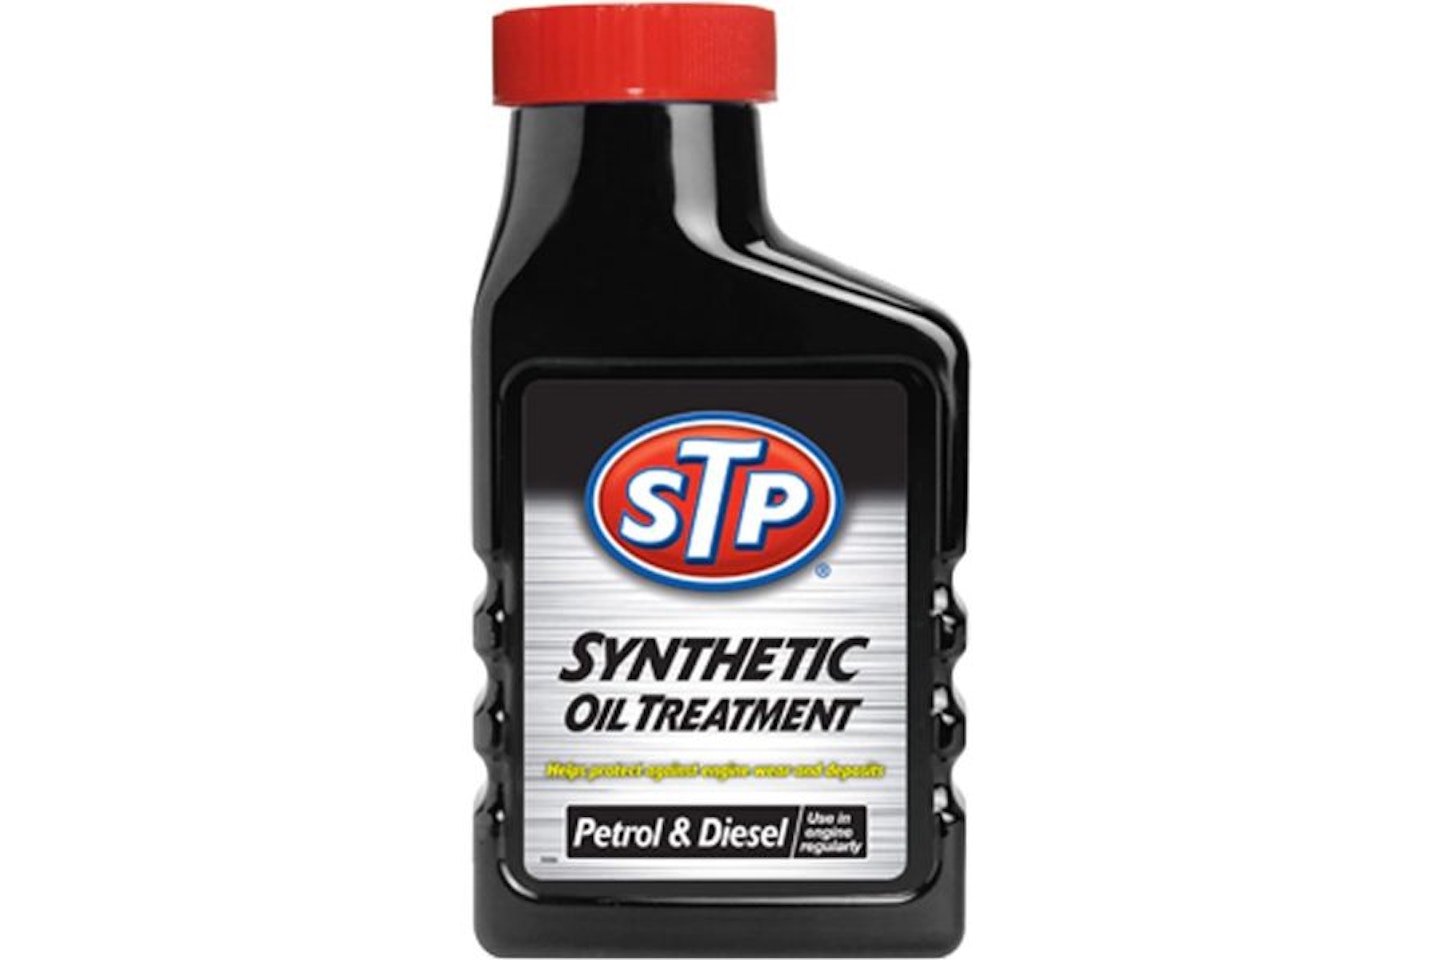 STP Synthetic Oil Treatment, 300ml